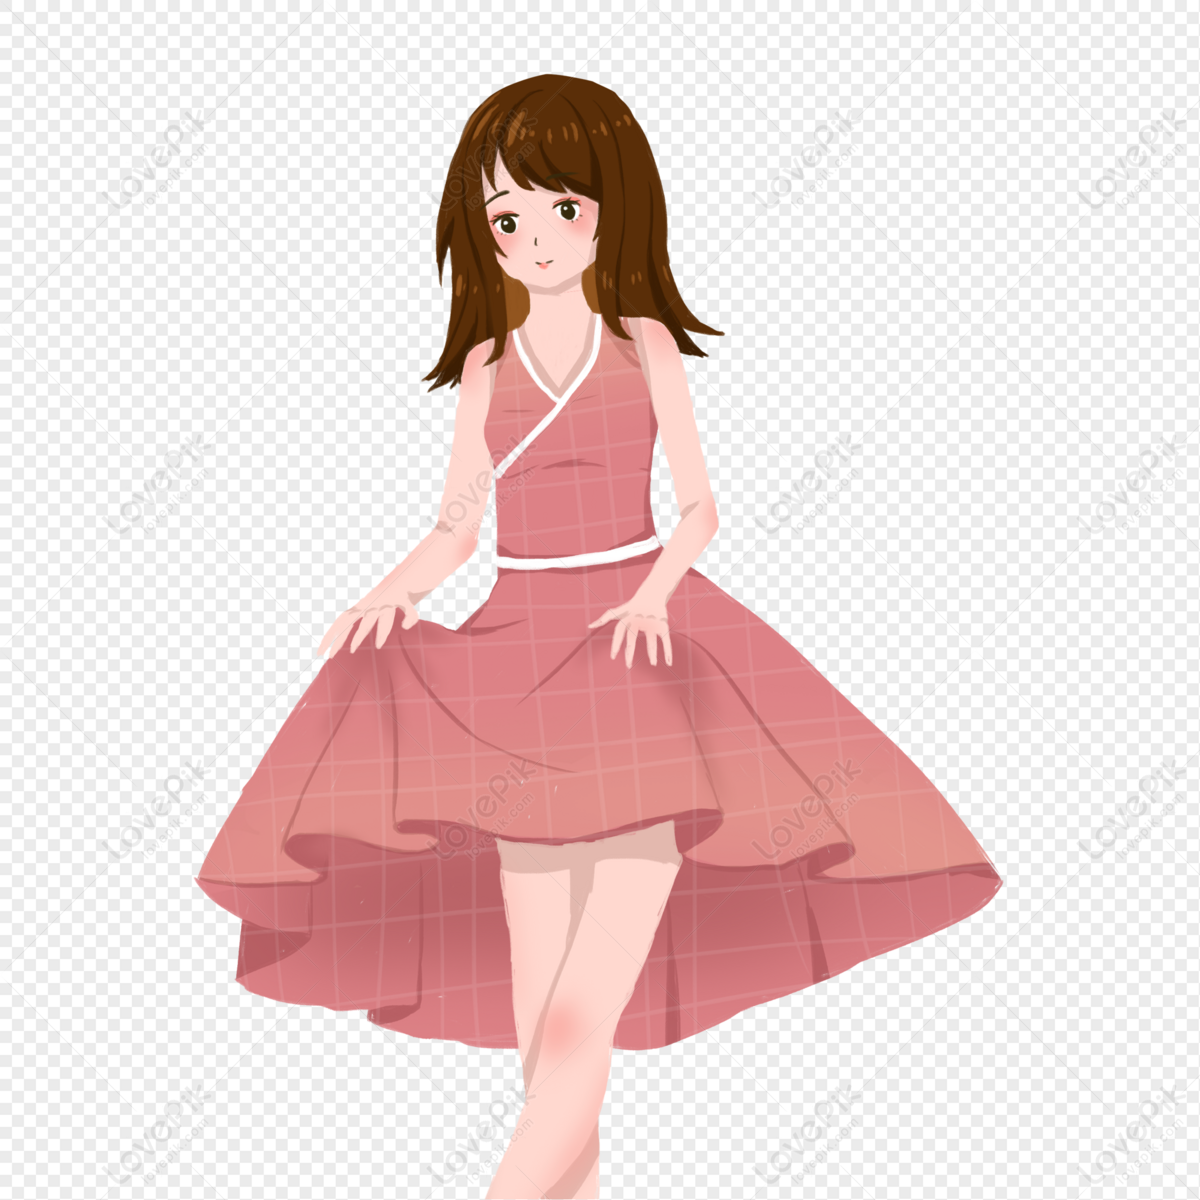 girl in dress cartoon